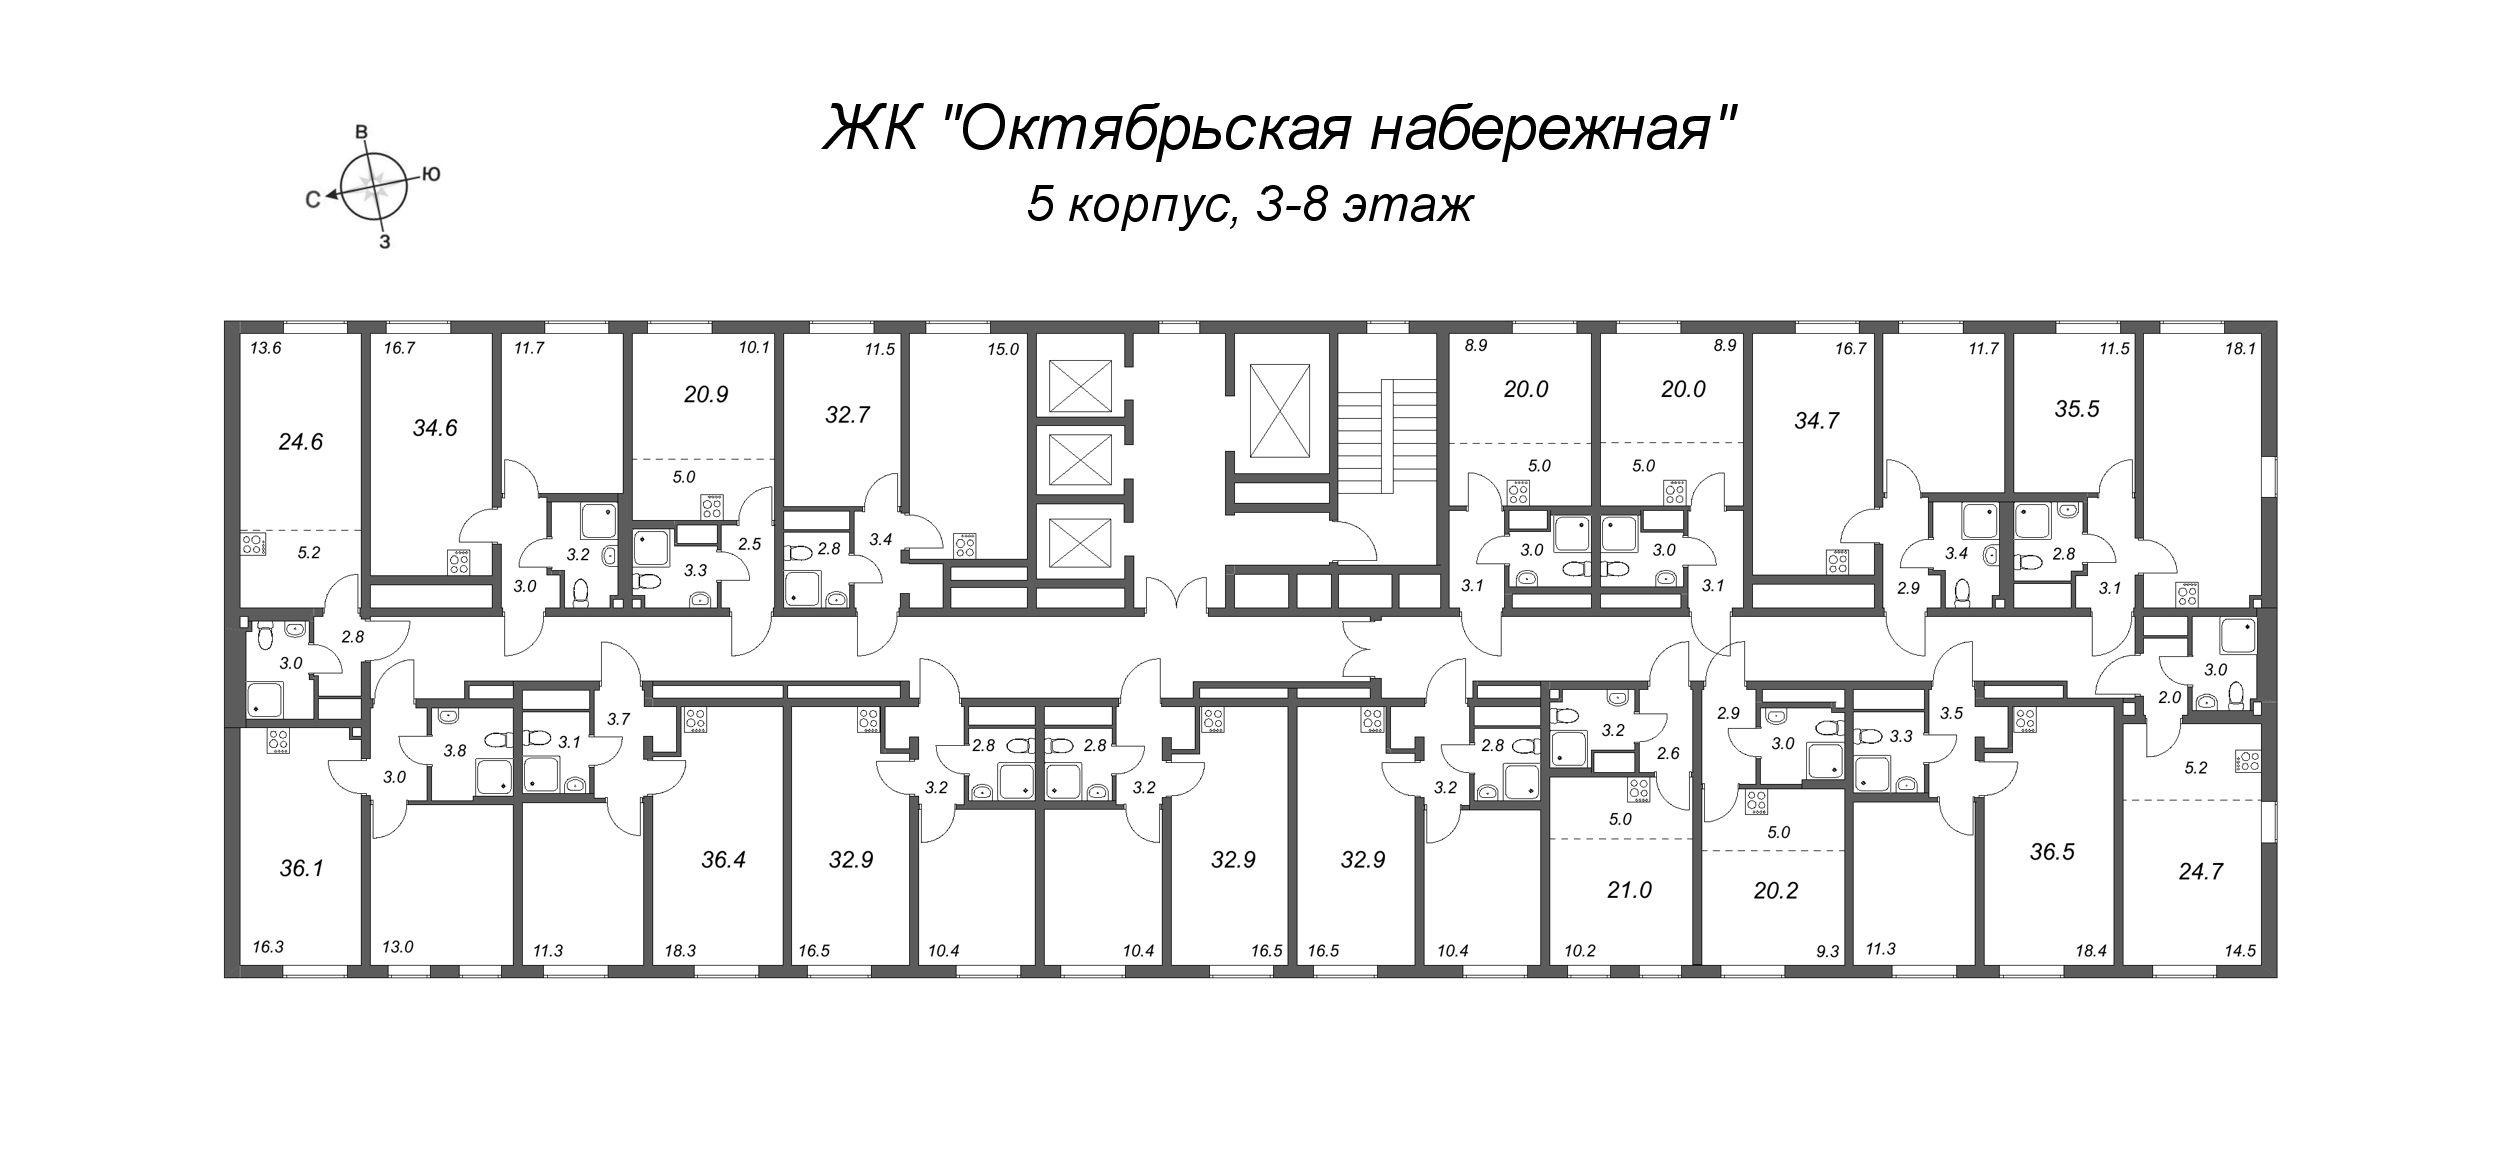 2-комнатная (Евро) квартира, 32.9 м² - планировка этажа